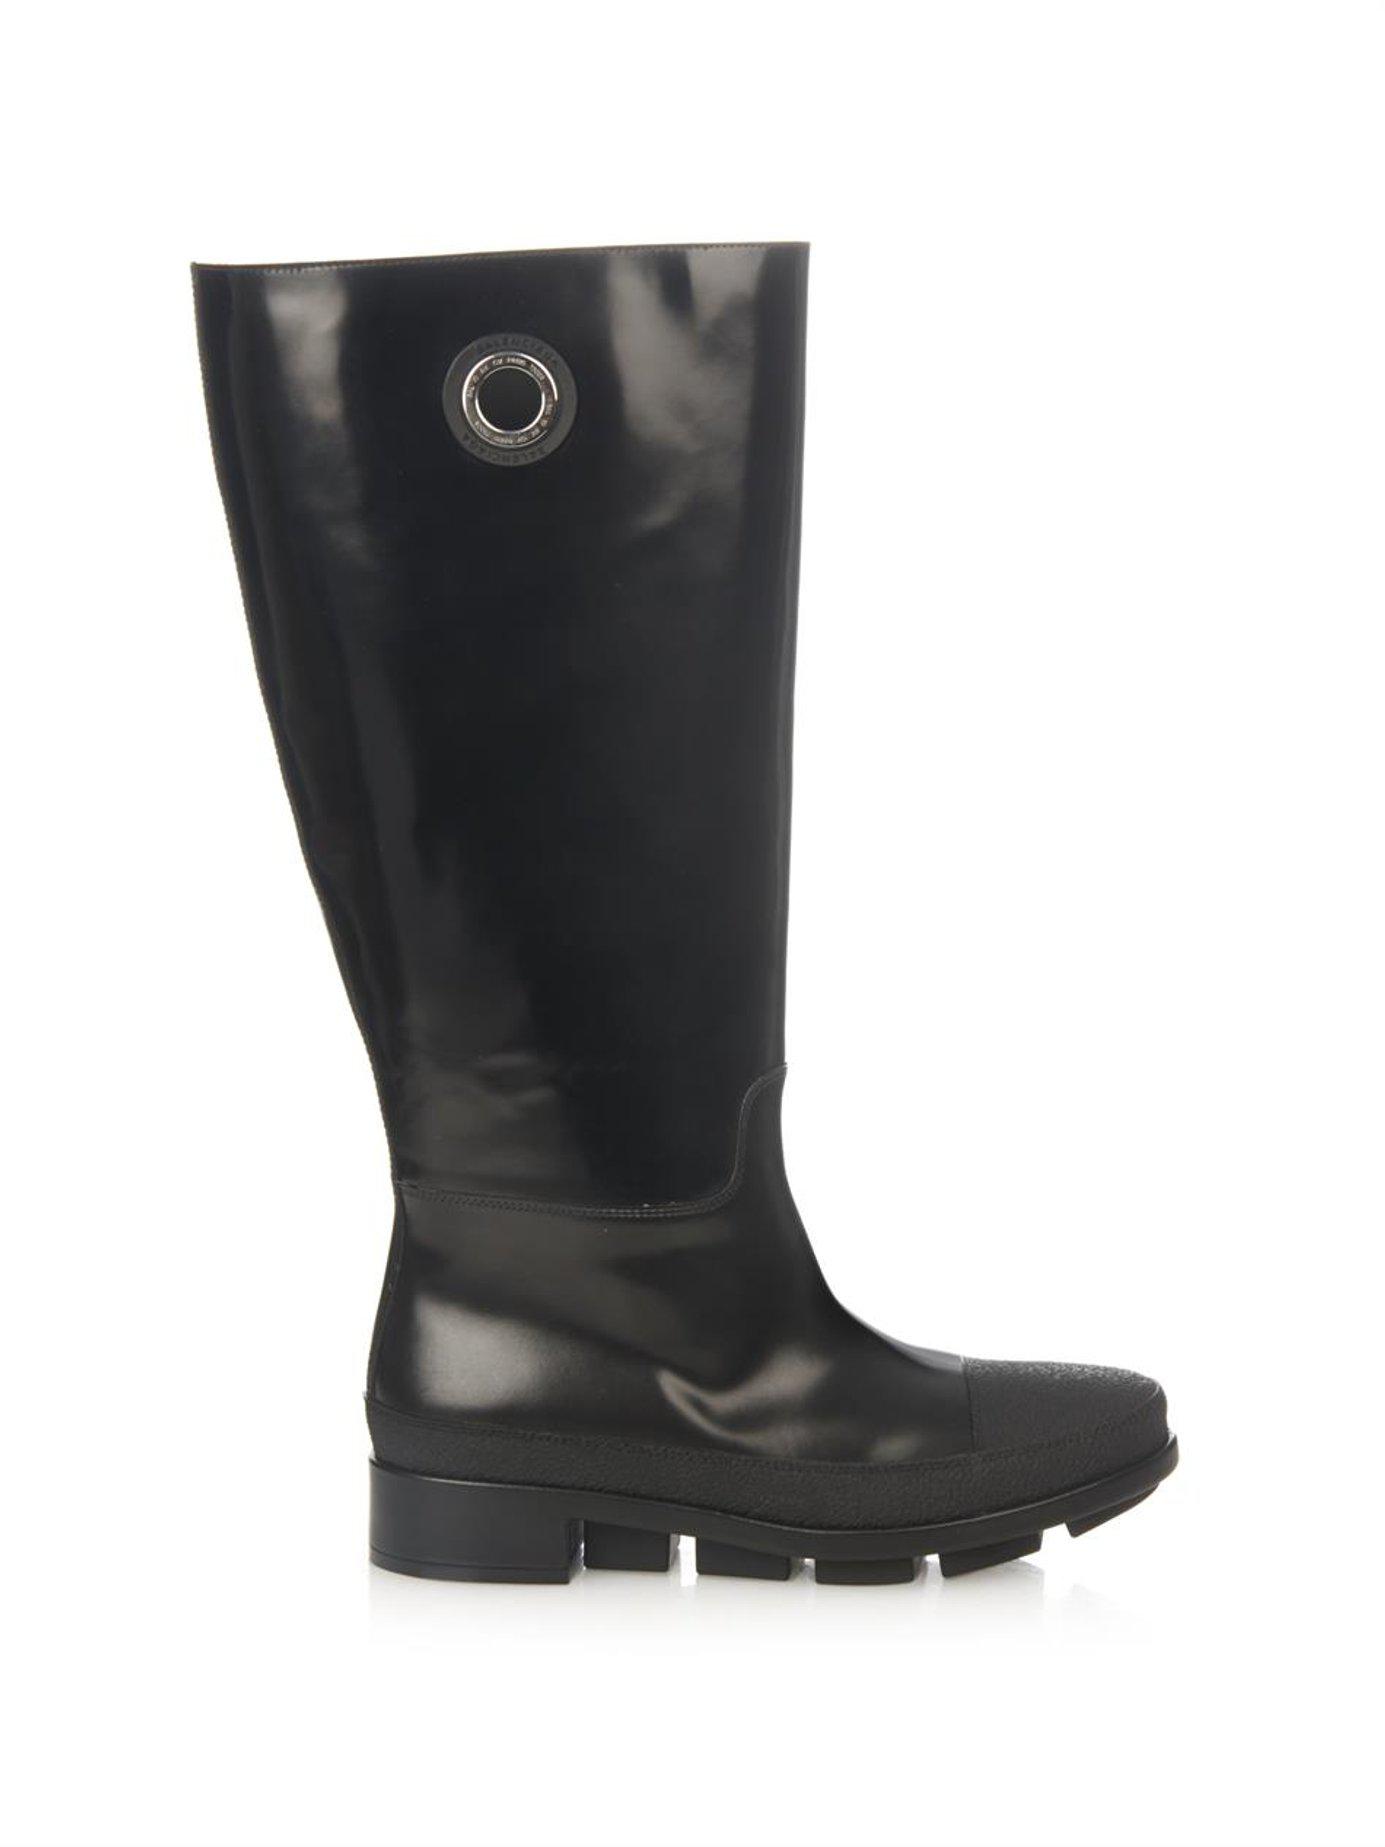 Balenciaga River Leather Rain Boots in Black - Lyst